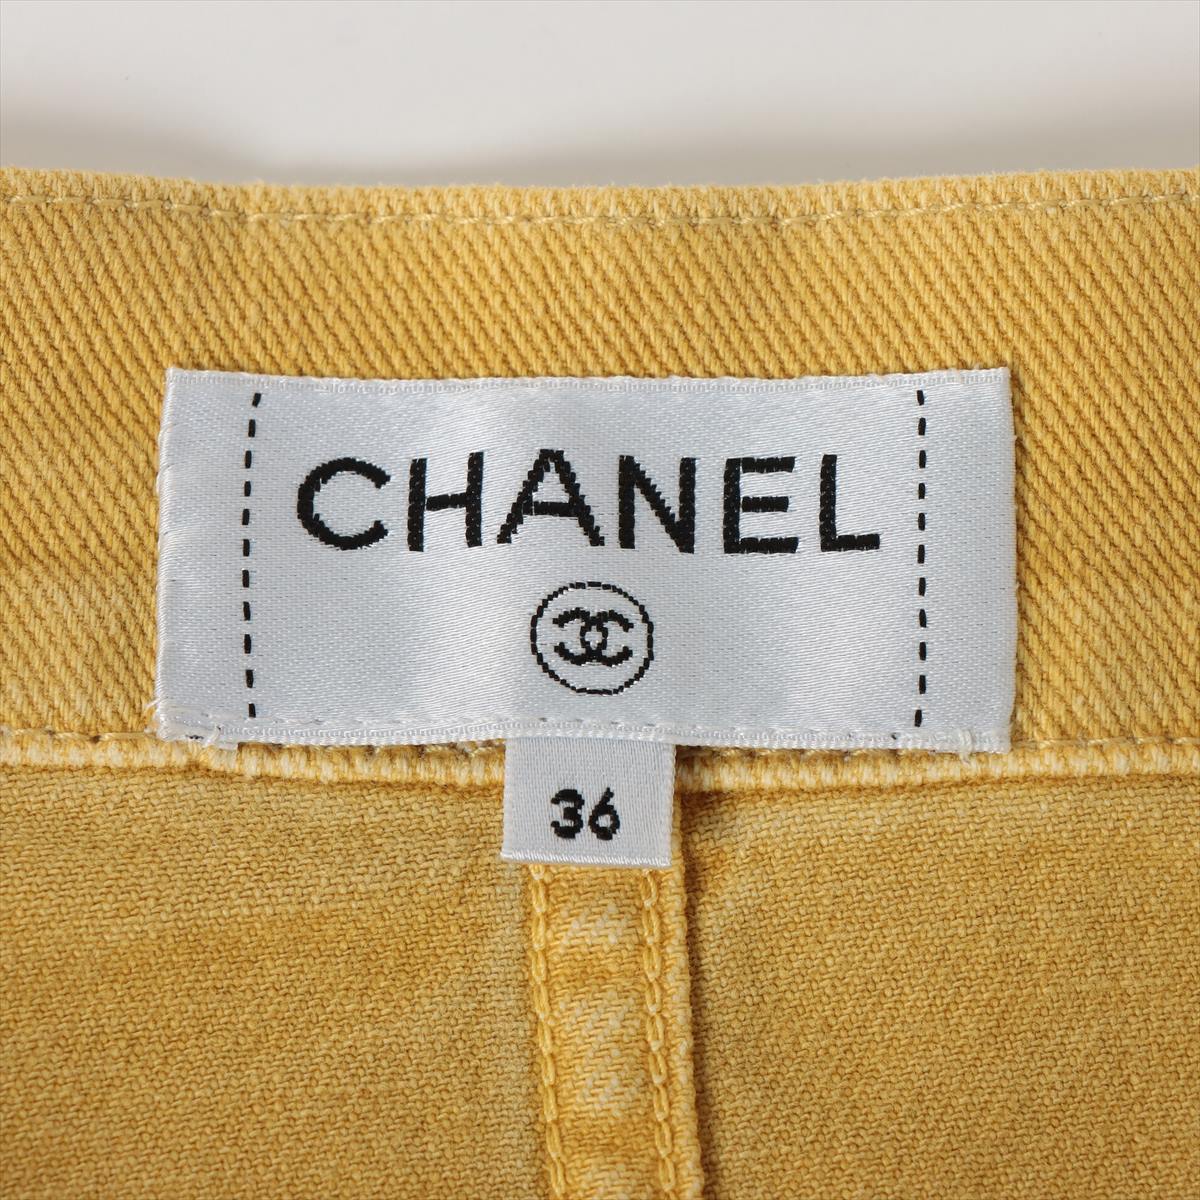 Chanel Coco Button Cotton Skirt 36 Ladies' Yellow gold  denim zip up miniskirt P56375V42677